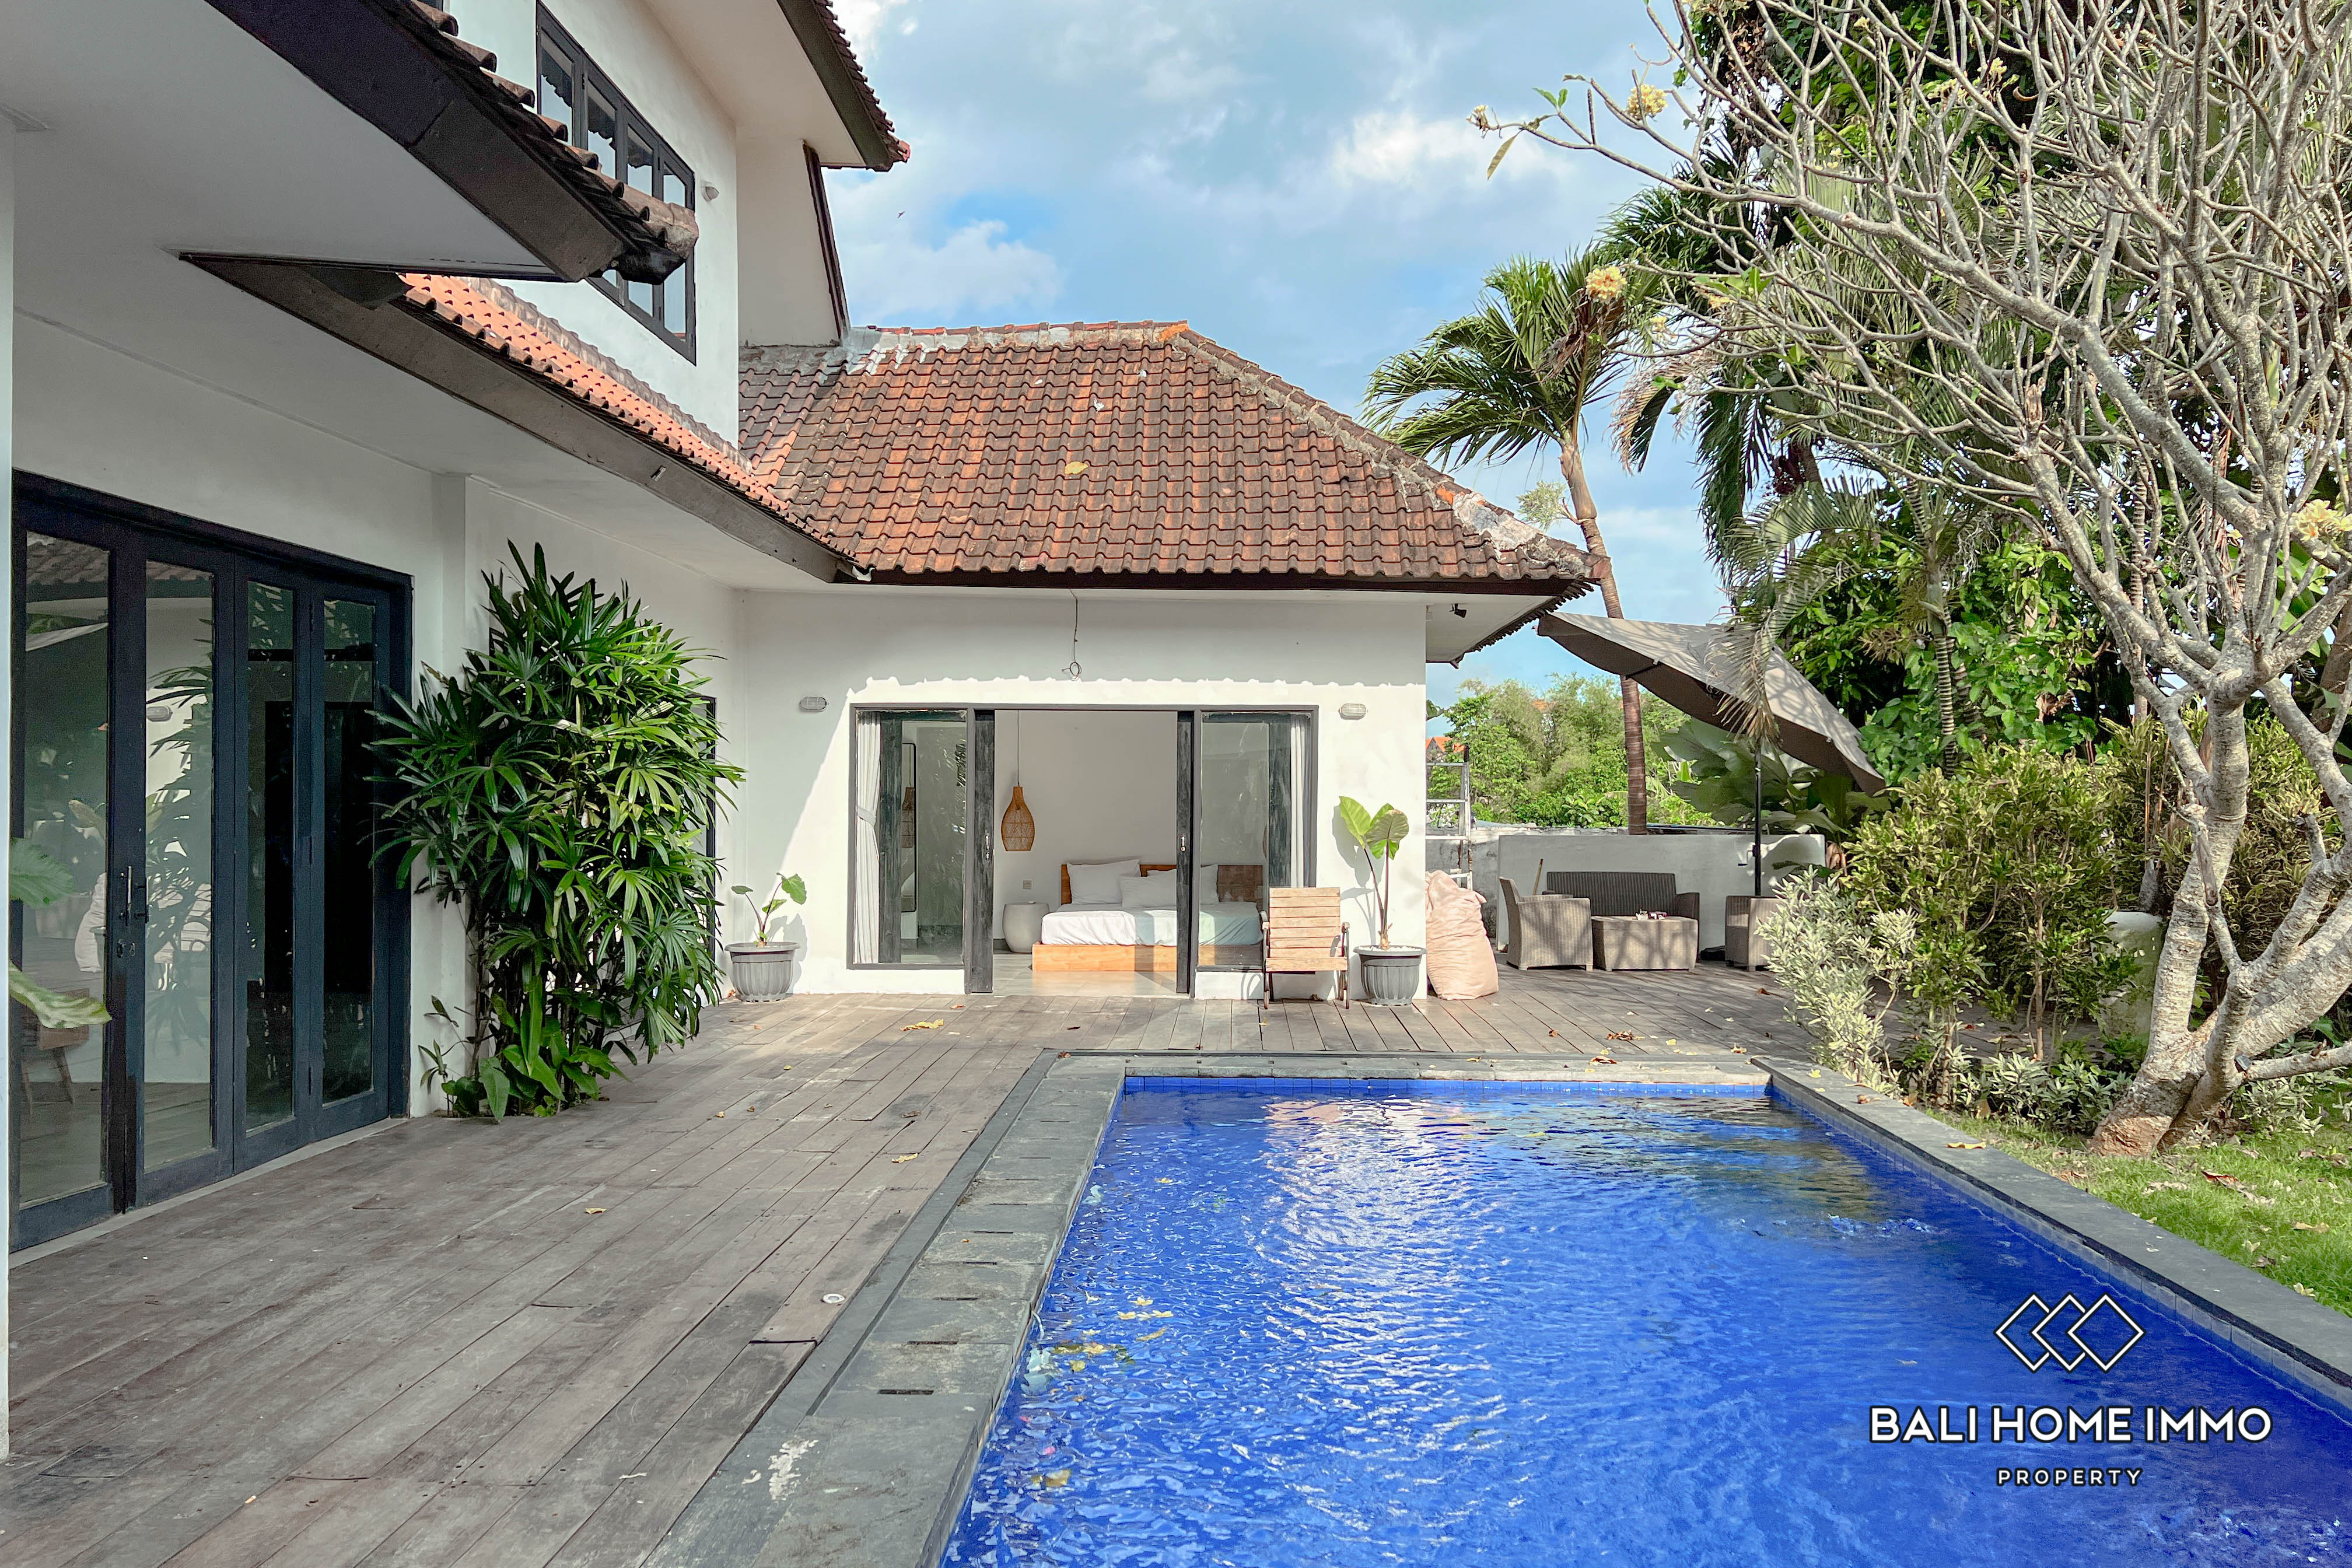 Villa Rent 4 Bedroom Villa For Yearly Rental In Bali Canggu Echo Beach Ya534 Bali Home Immo